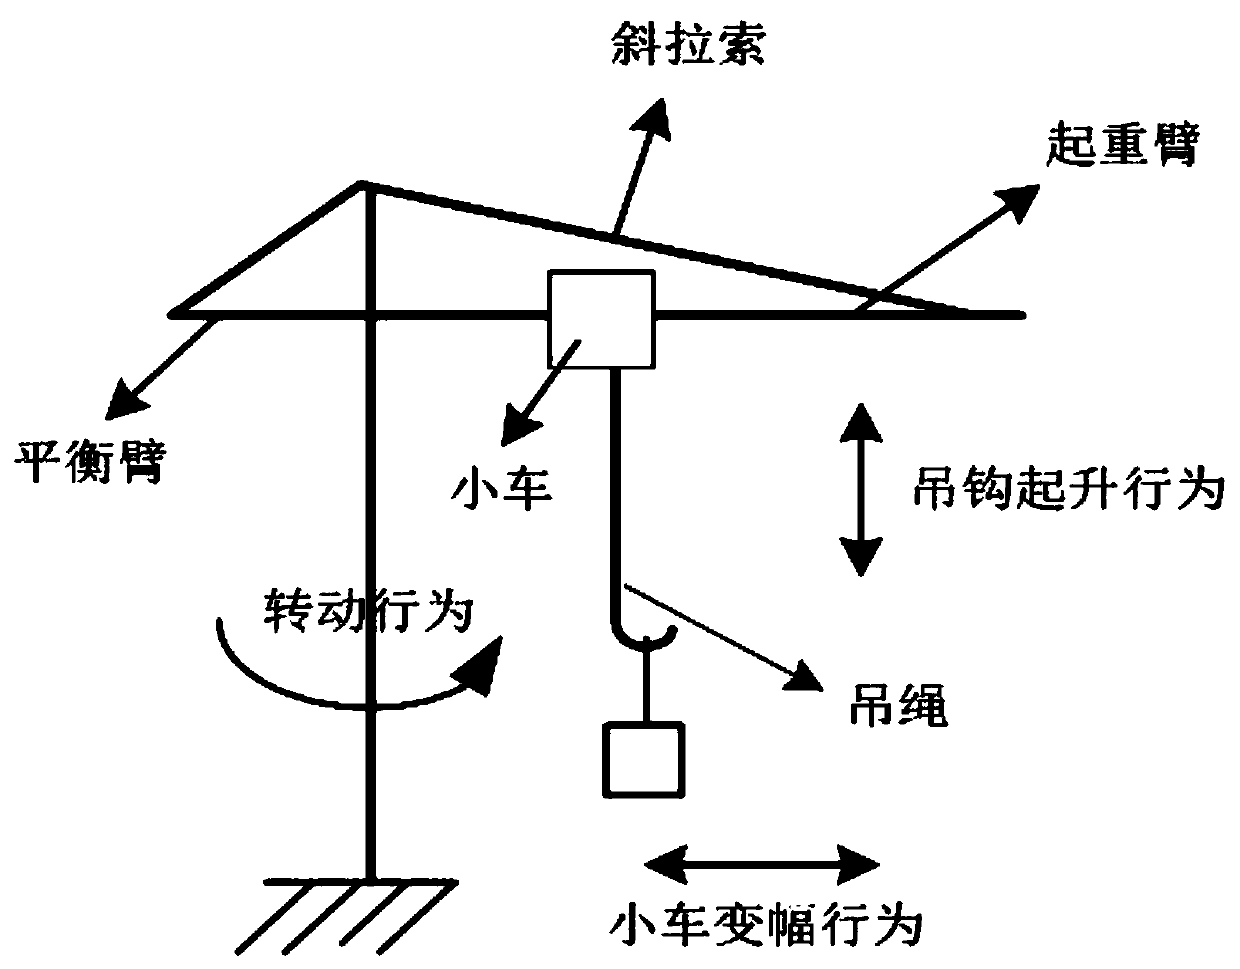 Multi-tower-crane three-dimensional space anti-collision method based on behaviors